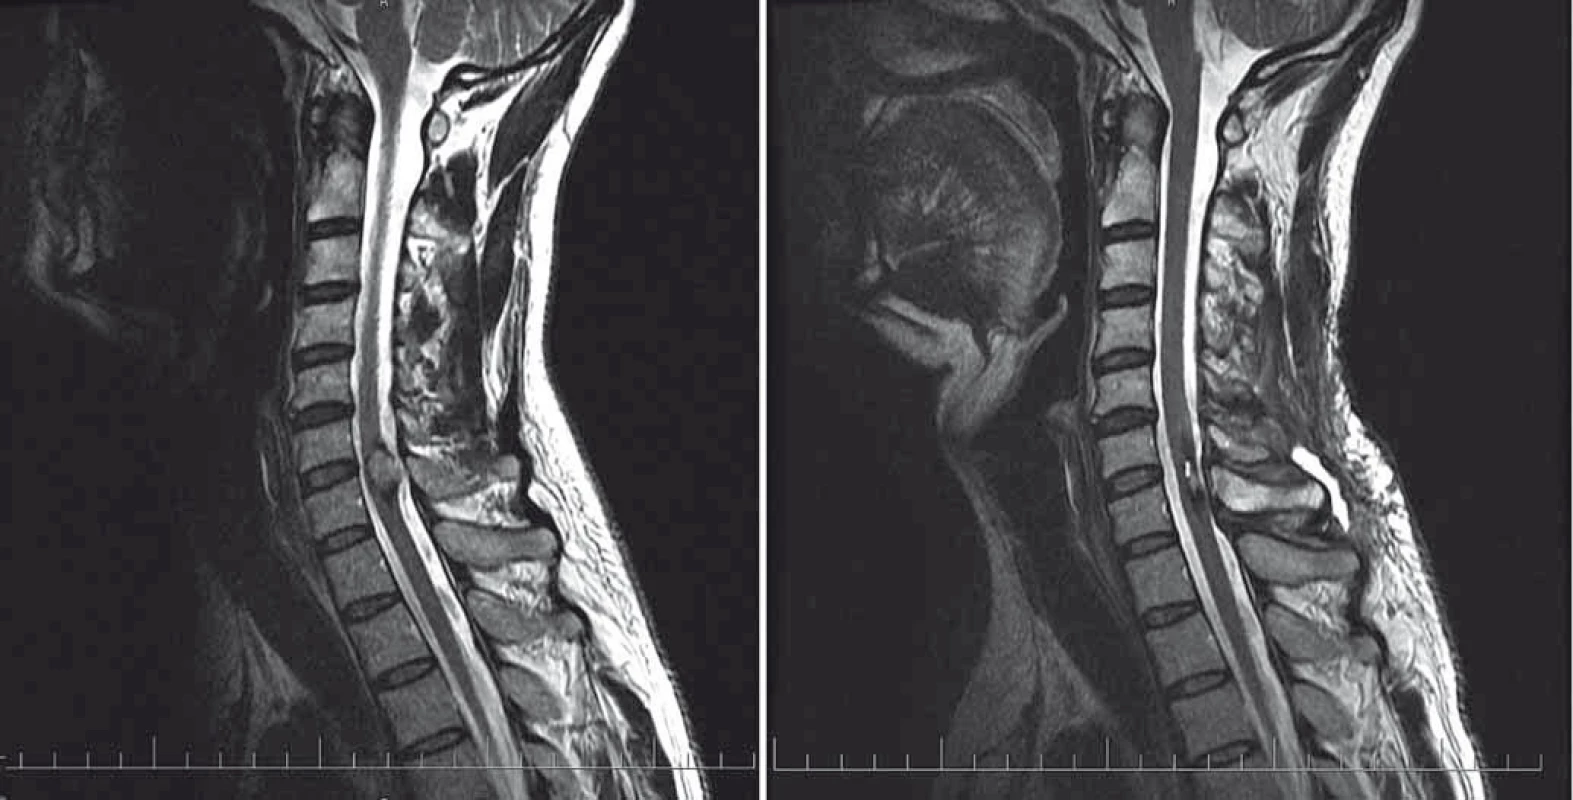 Pacient s intramedulárním kavernomem C6/7 před resekcí (vlevo) a po resekci (vpravo).
Fig.1. Patient harbouring intramedullary cavernoma at C6/7 level. Pre-op (left) and post-op (right) MRI scans.